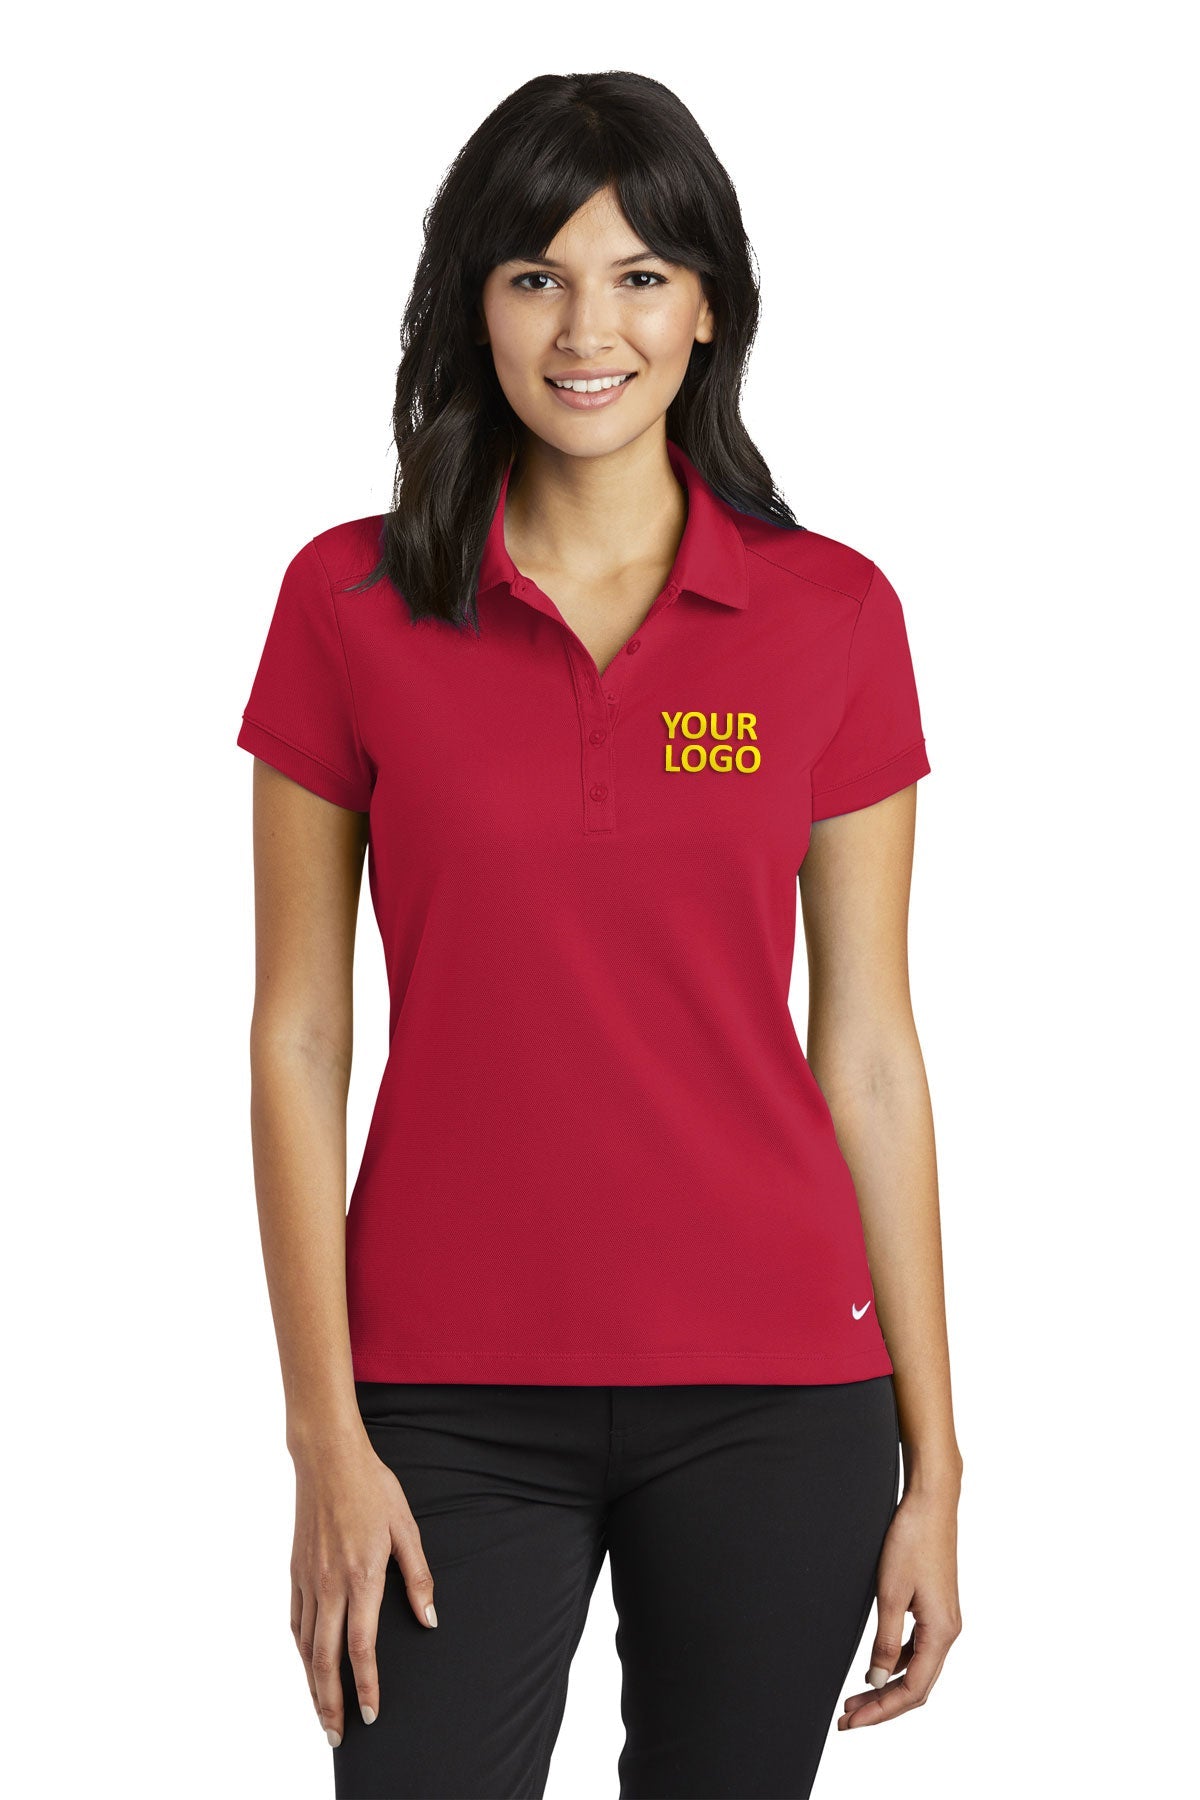 nike gym red 746100 order custom polo shirts